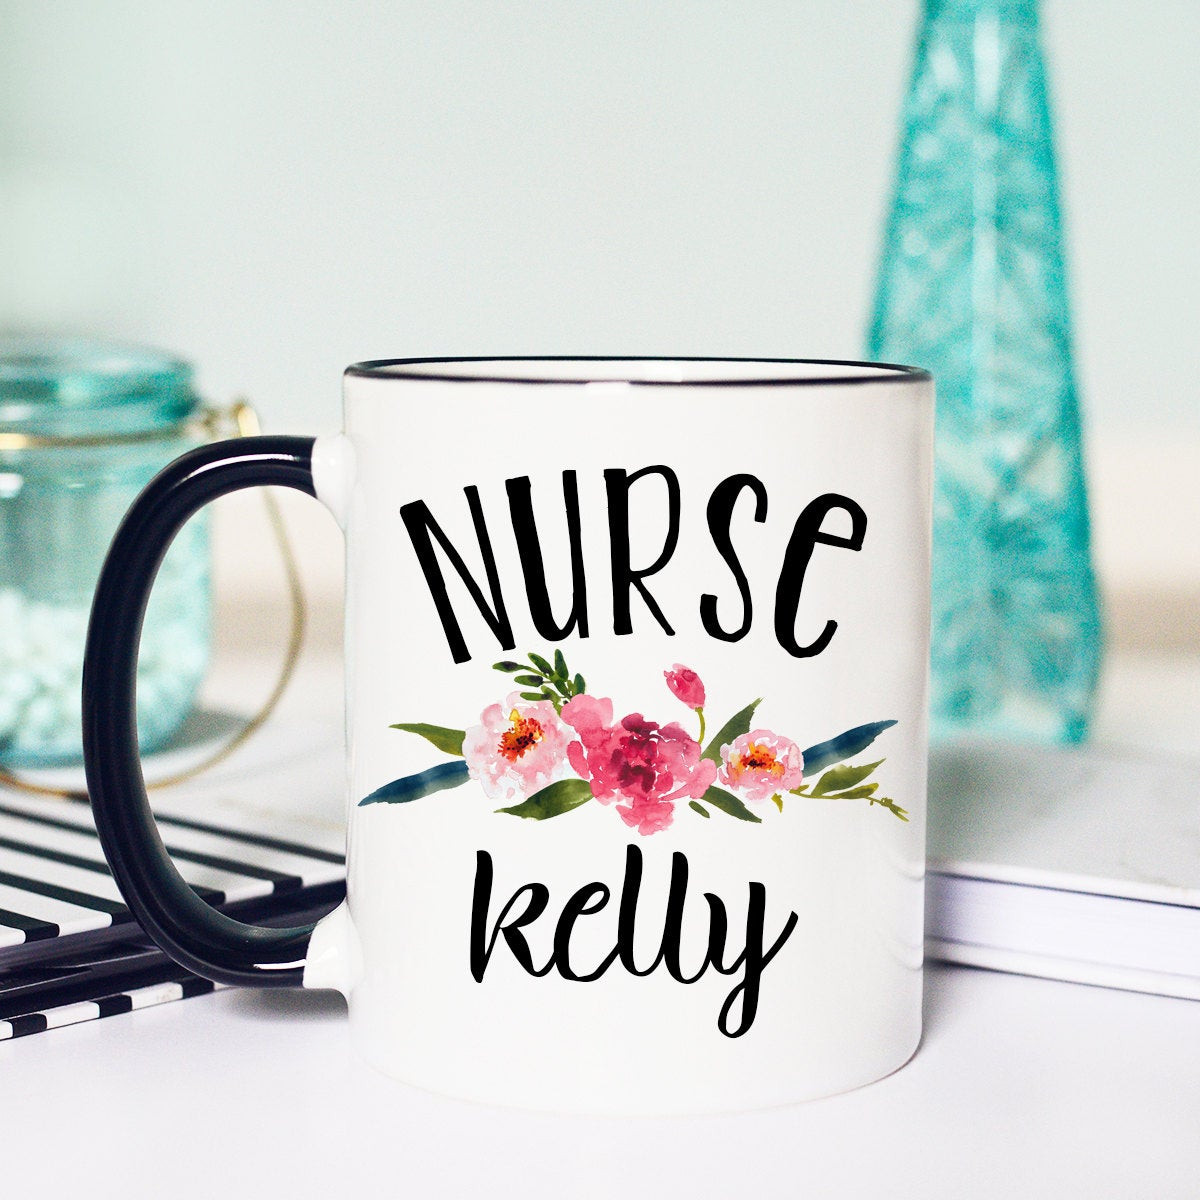 Gift Ideas For Nurses Graduation
 Graduation Gift for Nurse Graduation Gift Nurse Gift Gift